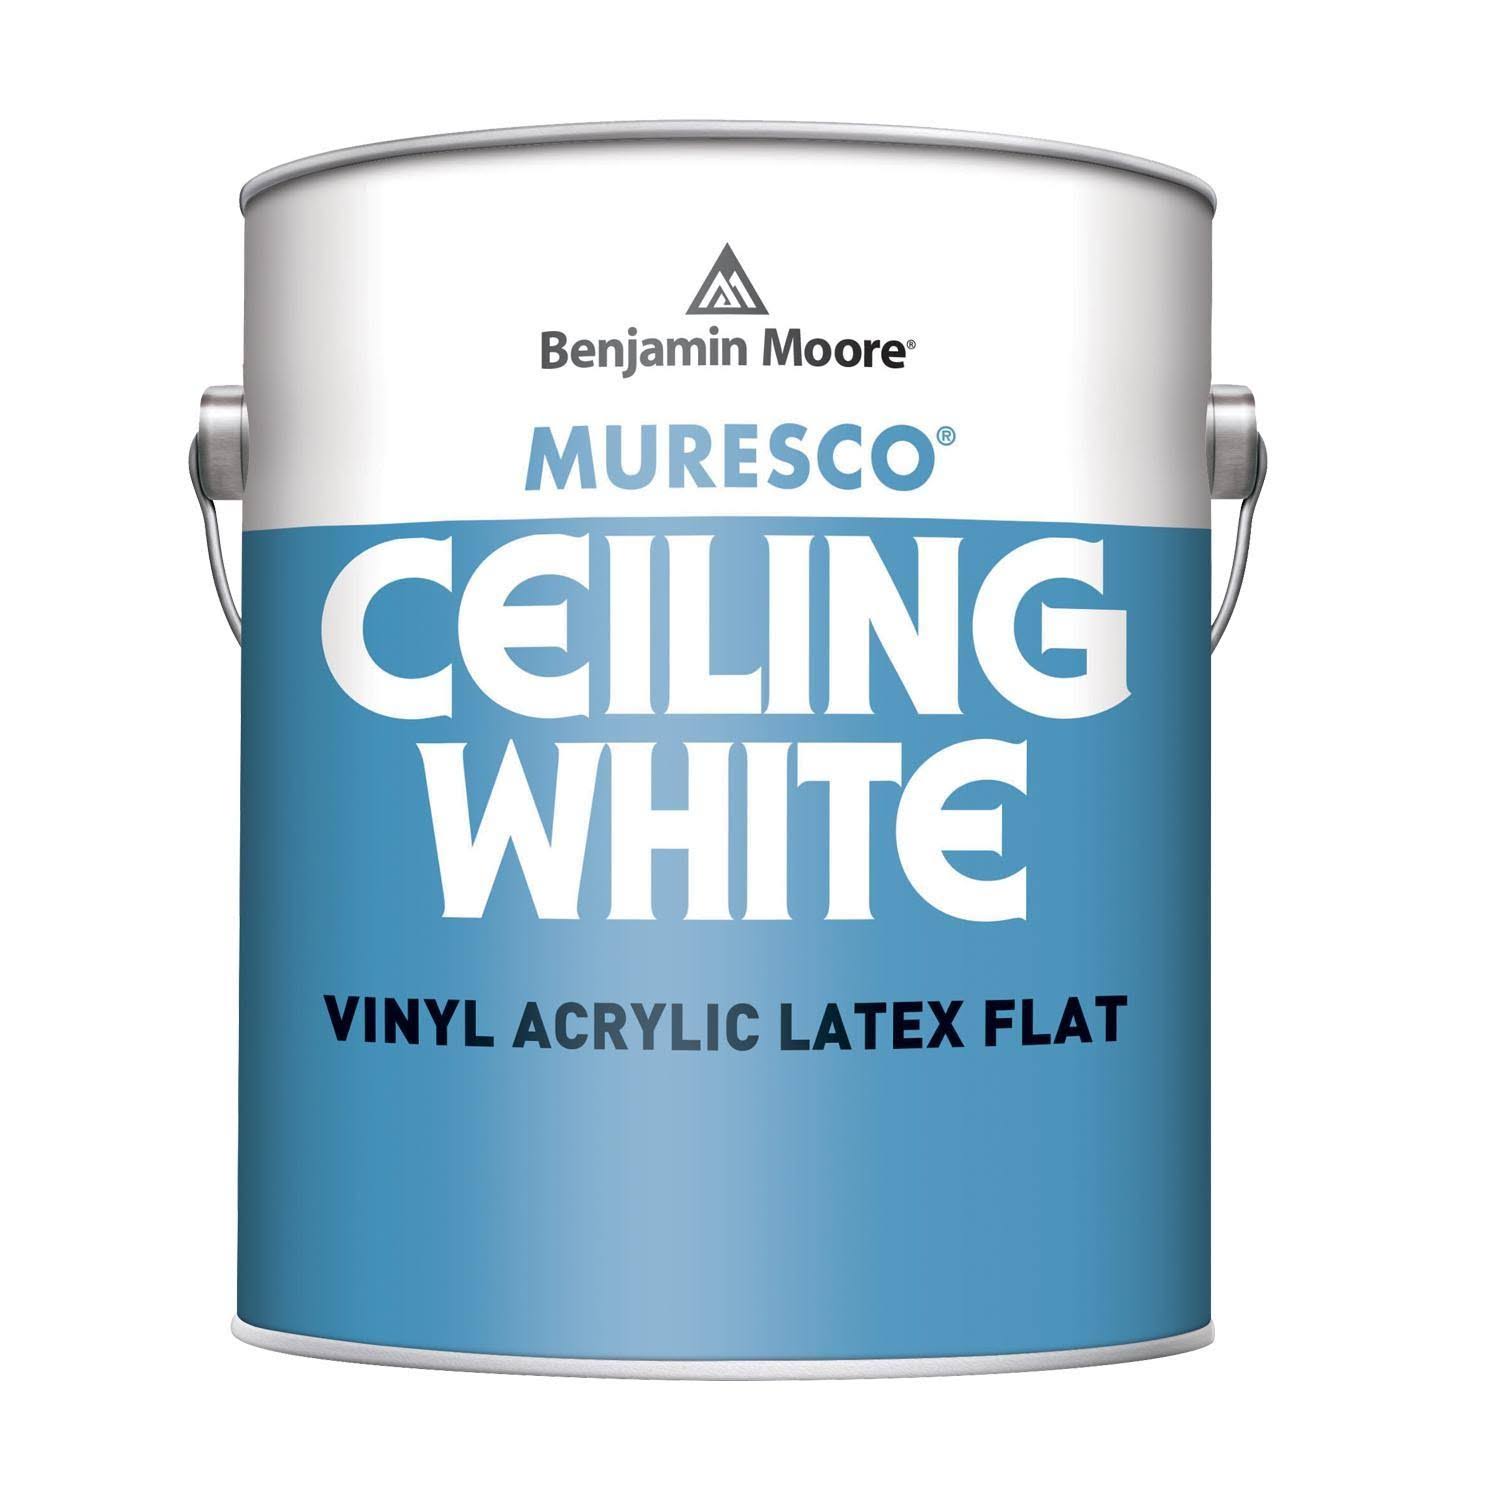 Benjamin Moore Muresco Ceiling Paint Flat (258) - Gallon / White